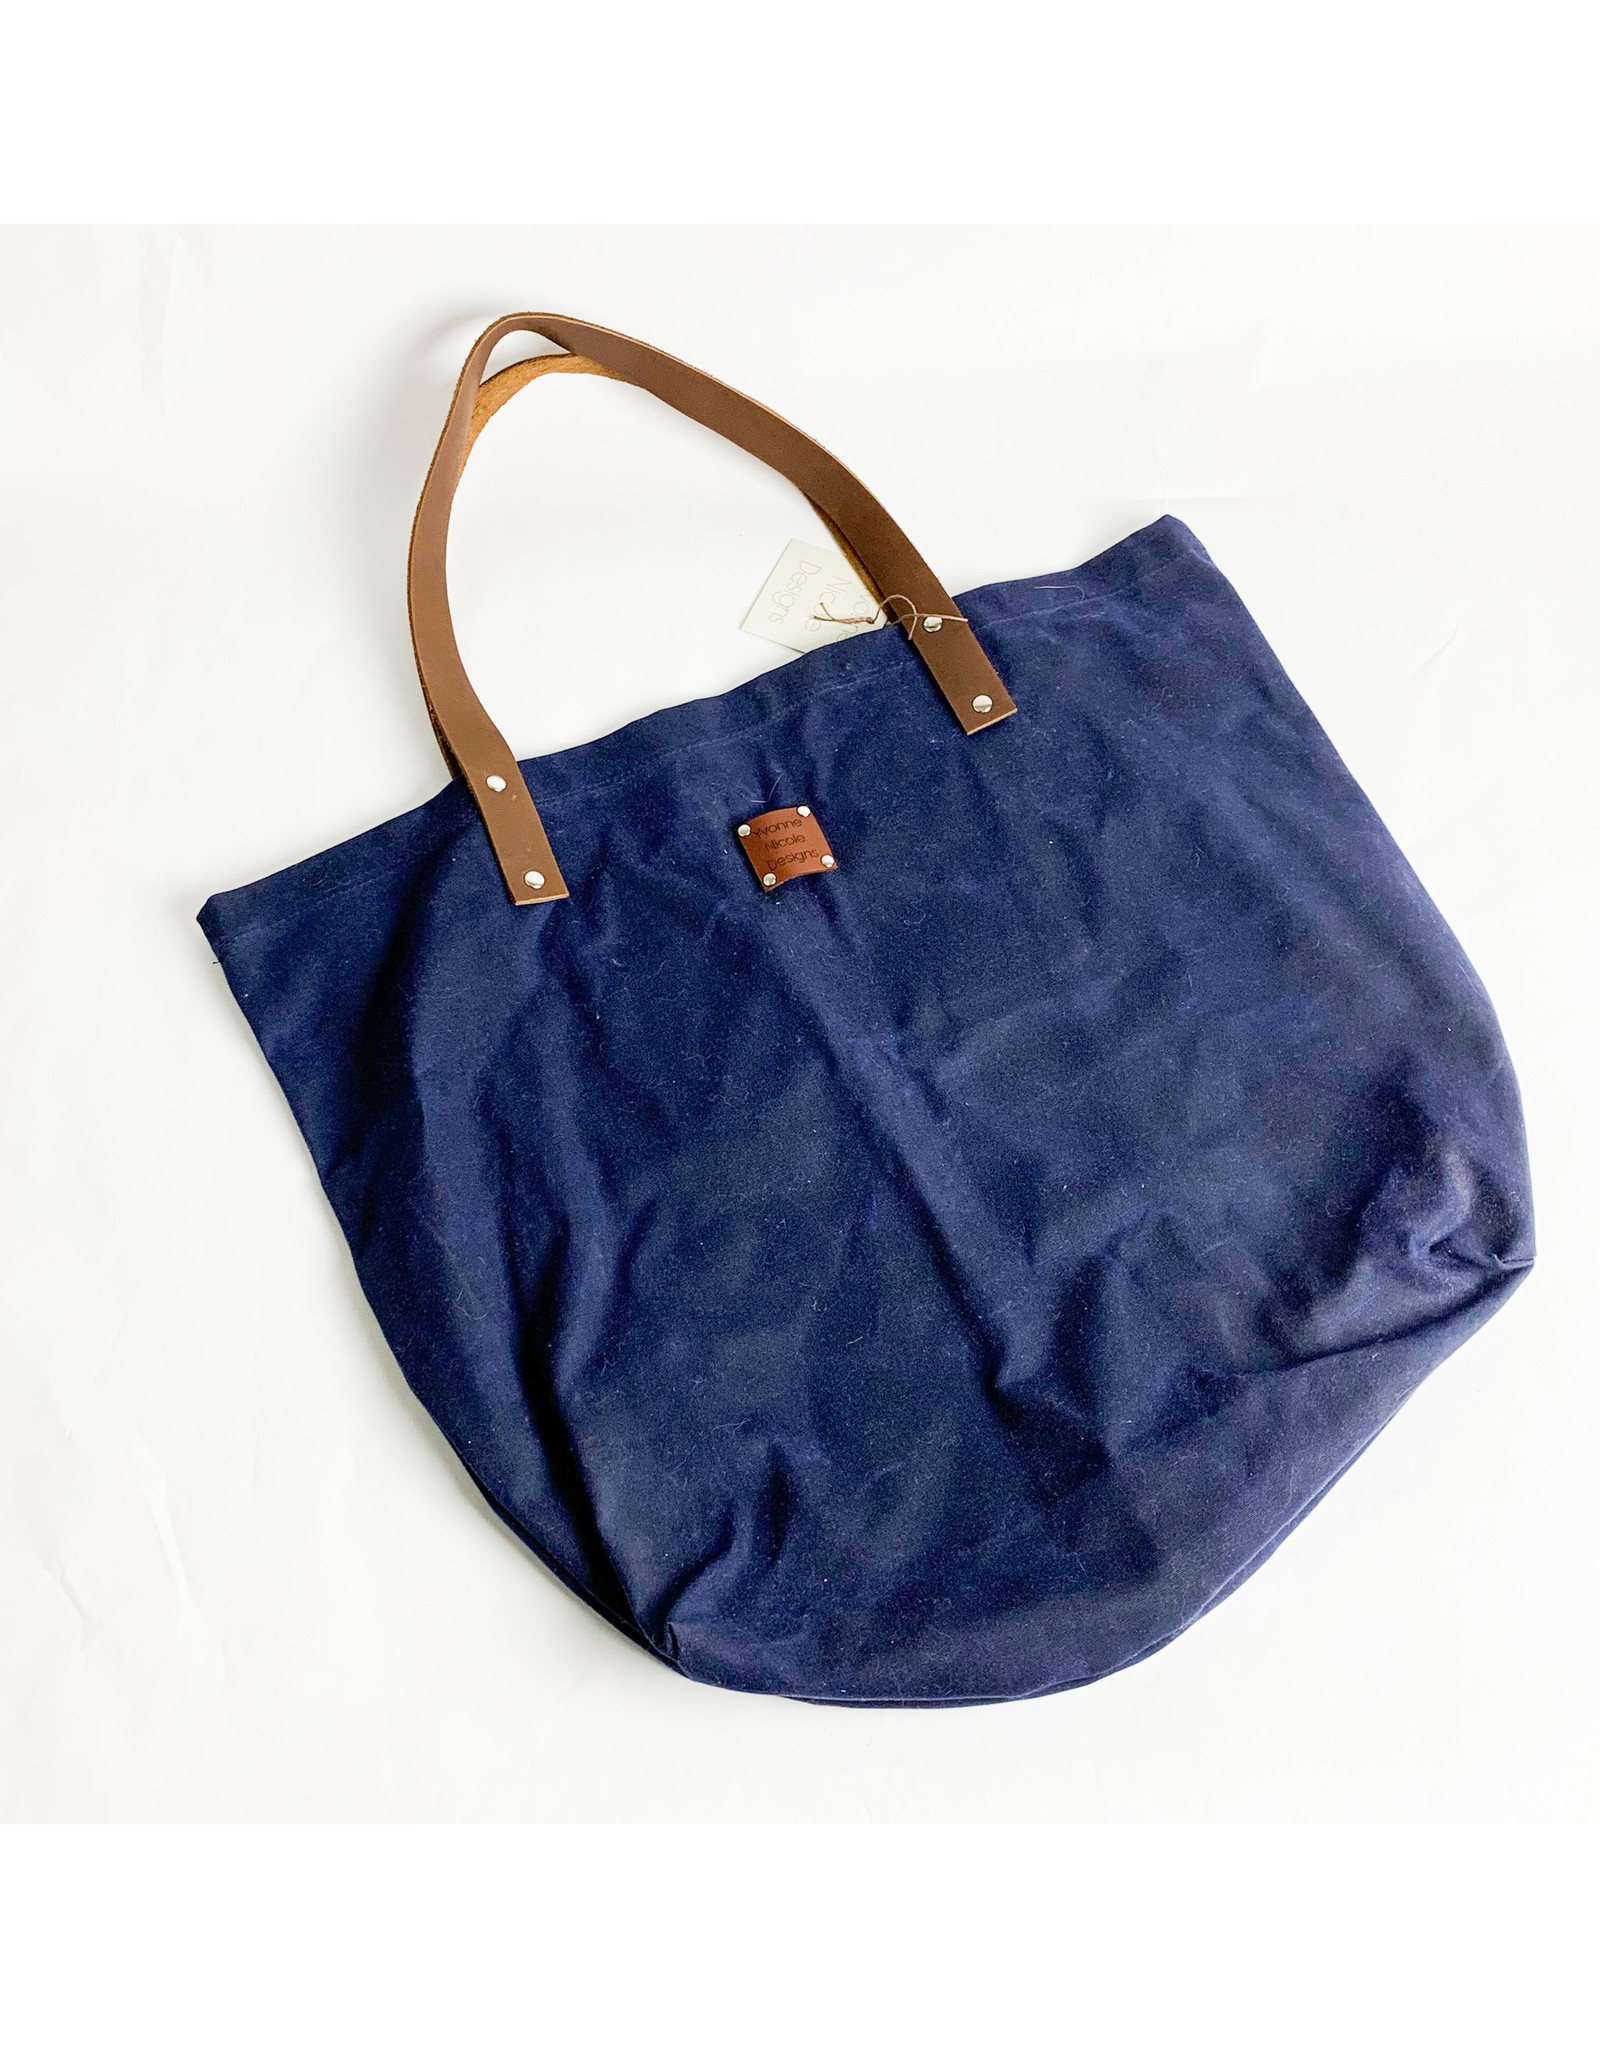 Yvonne Nicole Designs YG001 navy market bag consignment